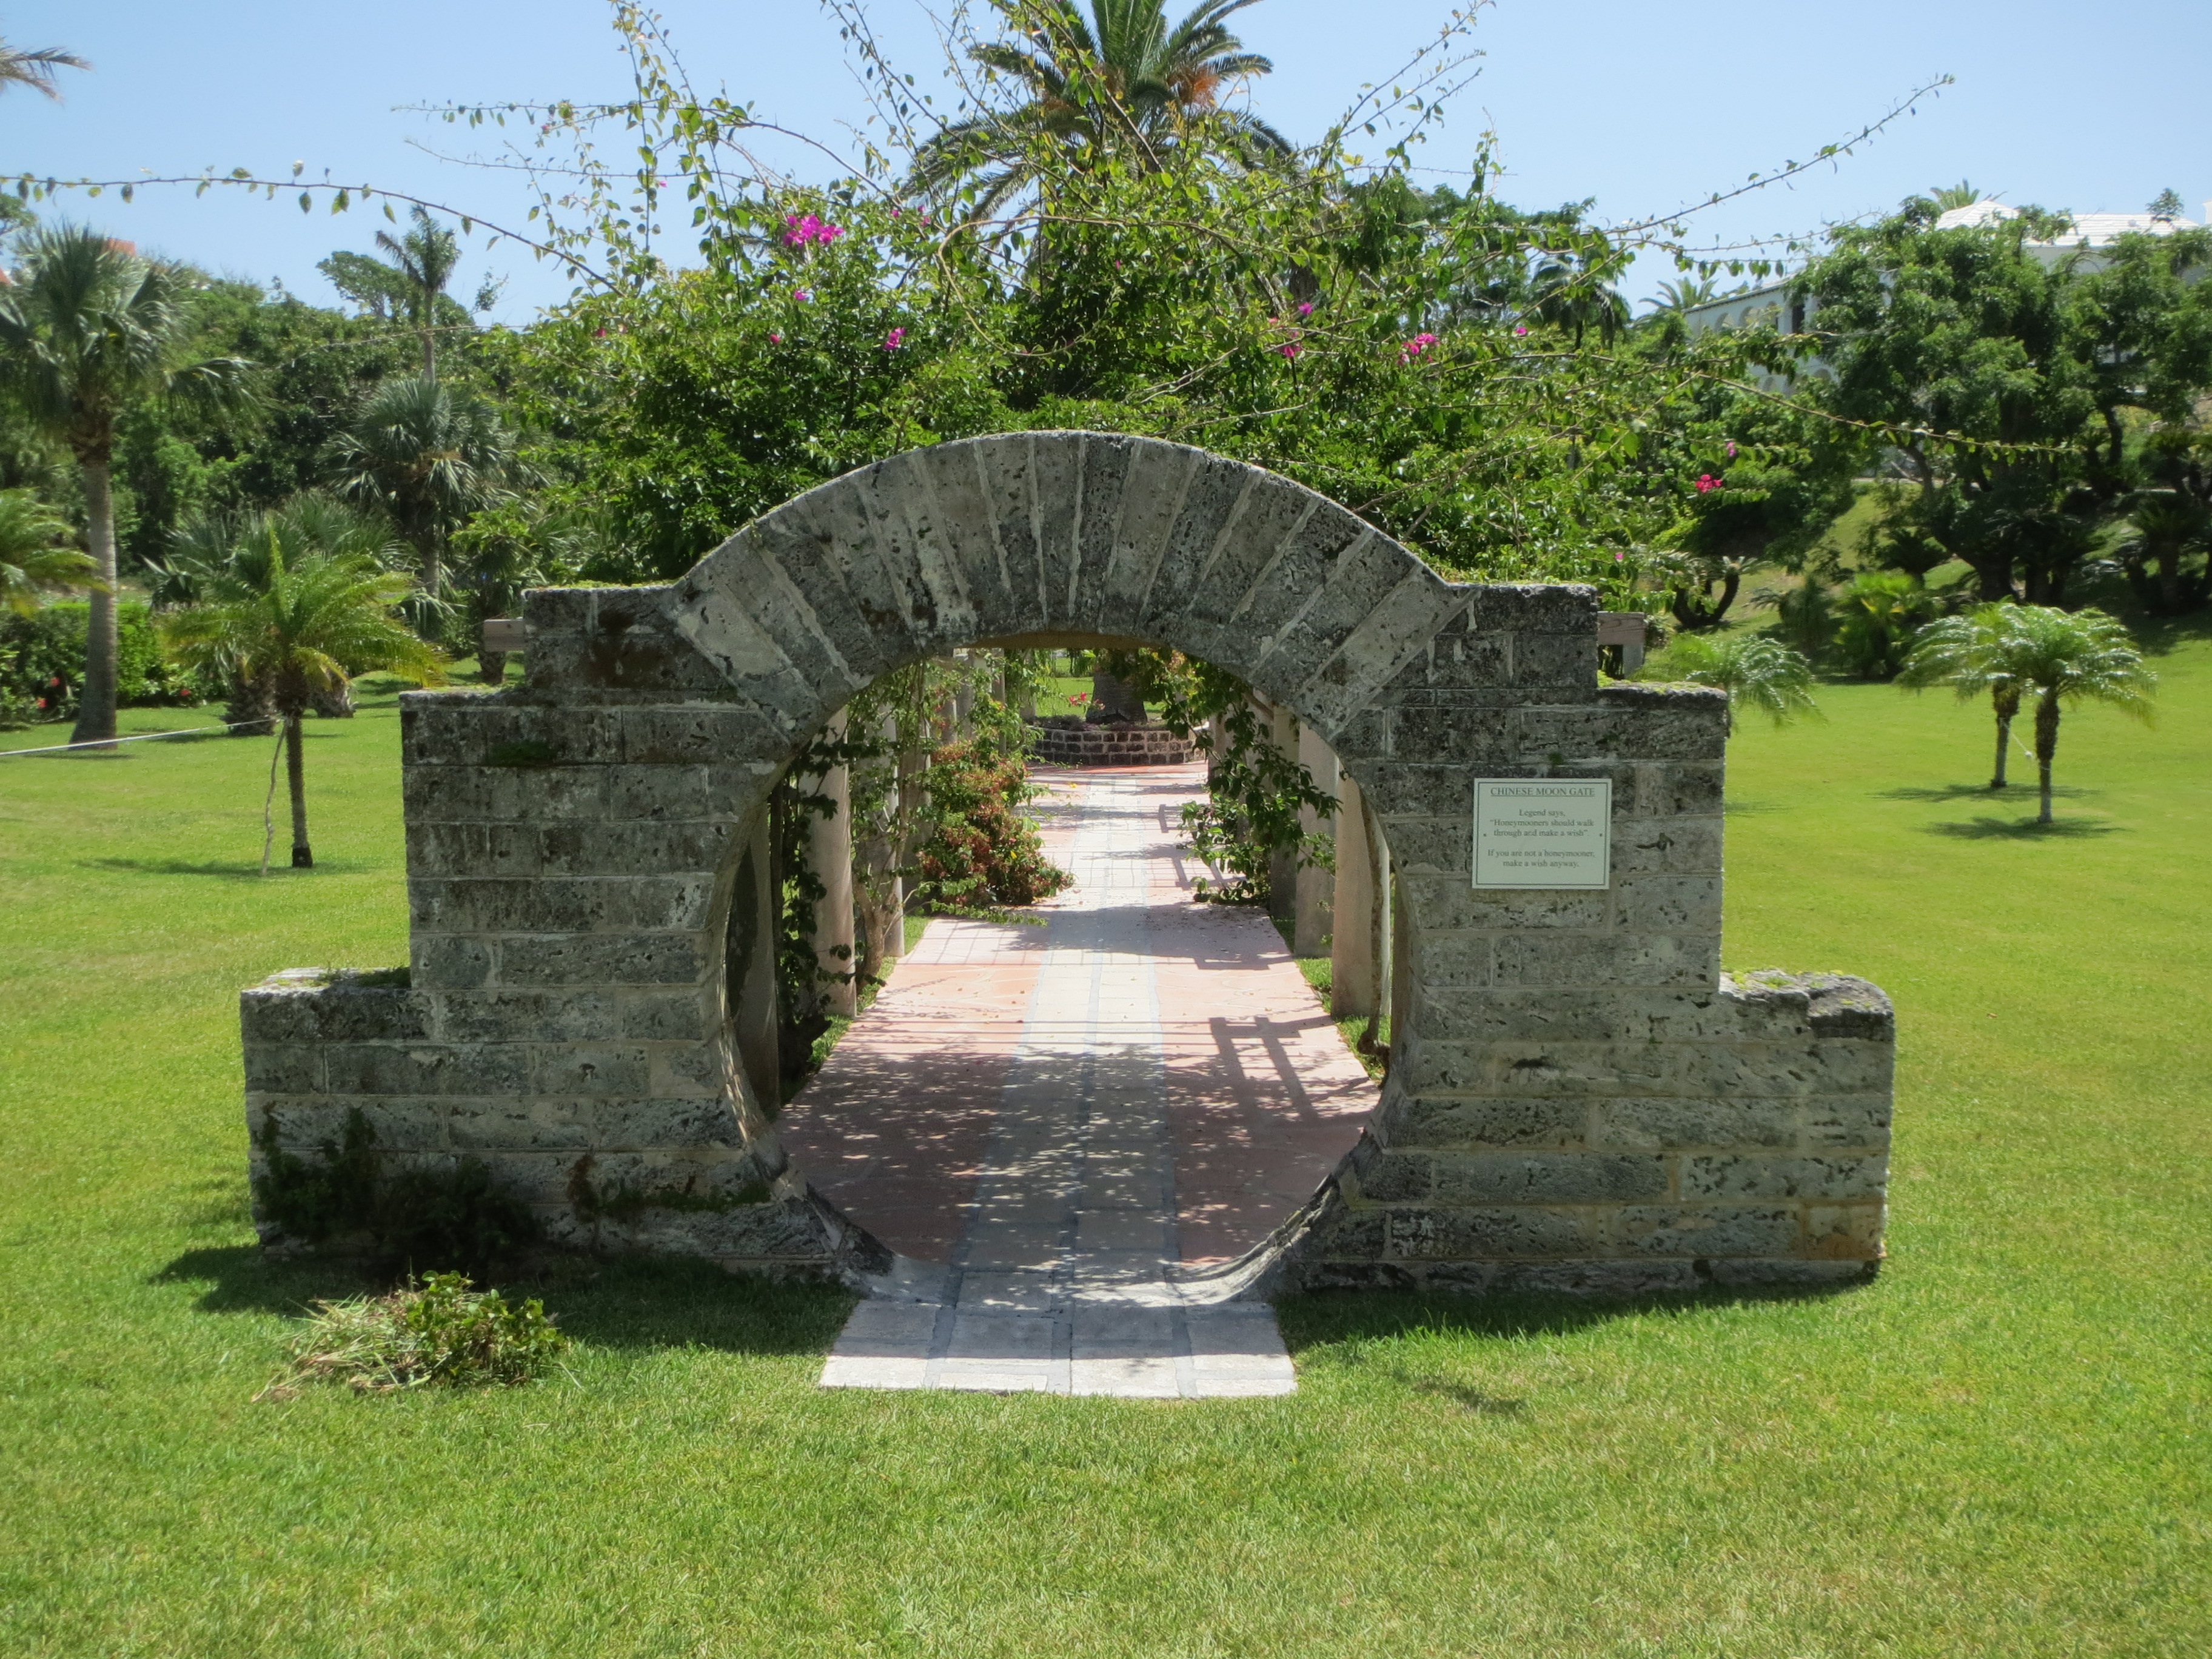  Bermuda Moon Gate Palm Grove Gardens. Photo Credit Melanie Reffes.